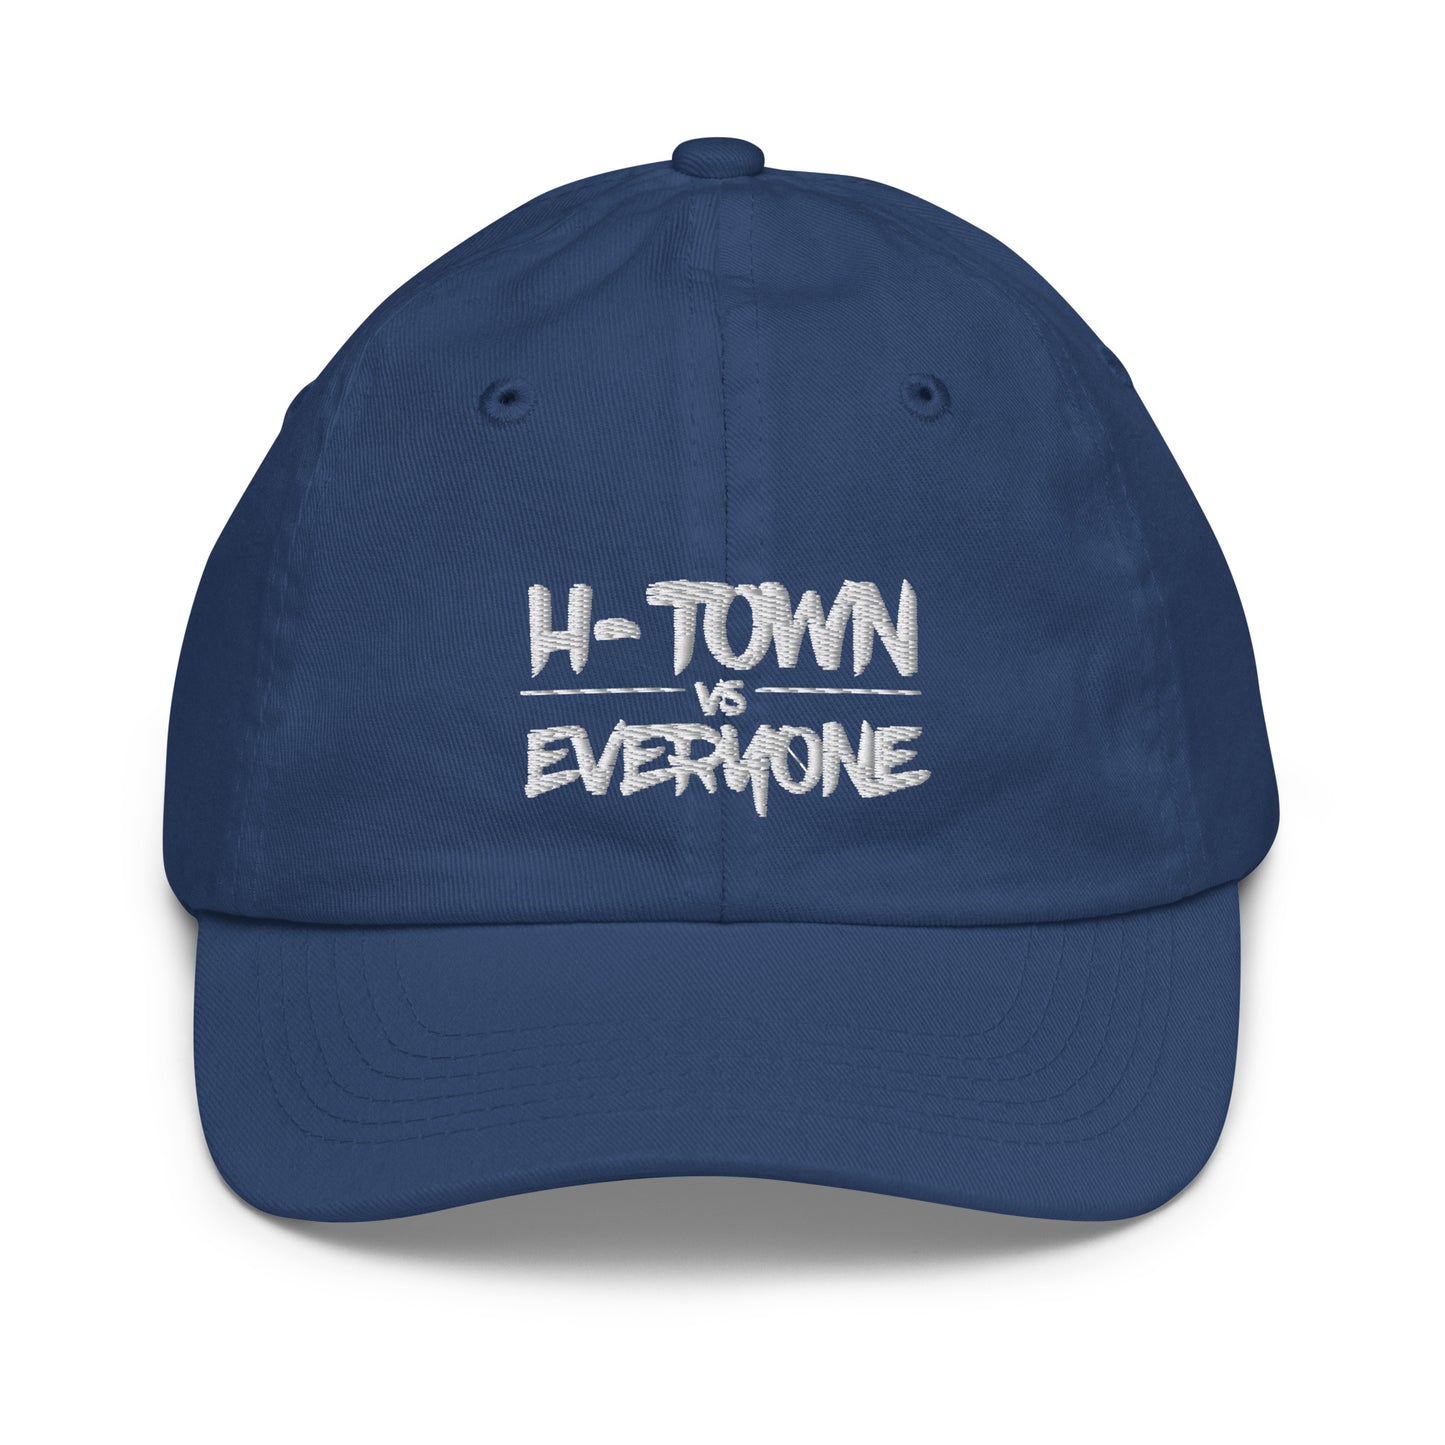 H-Town vs Everyone Youth Baseball Cap